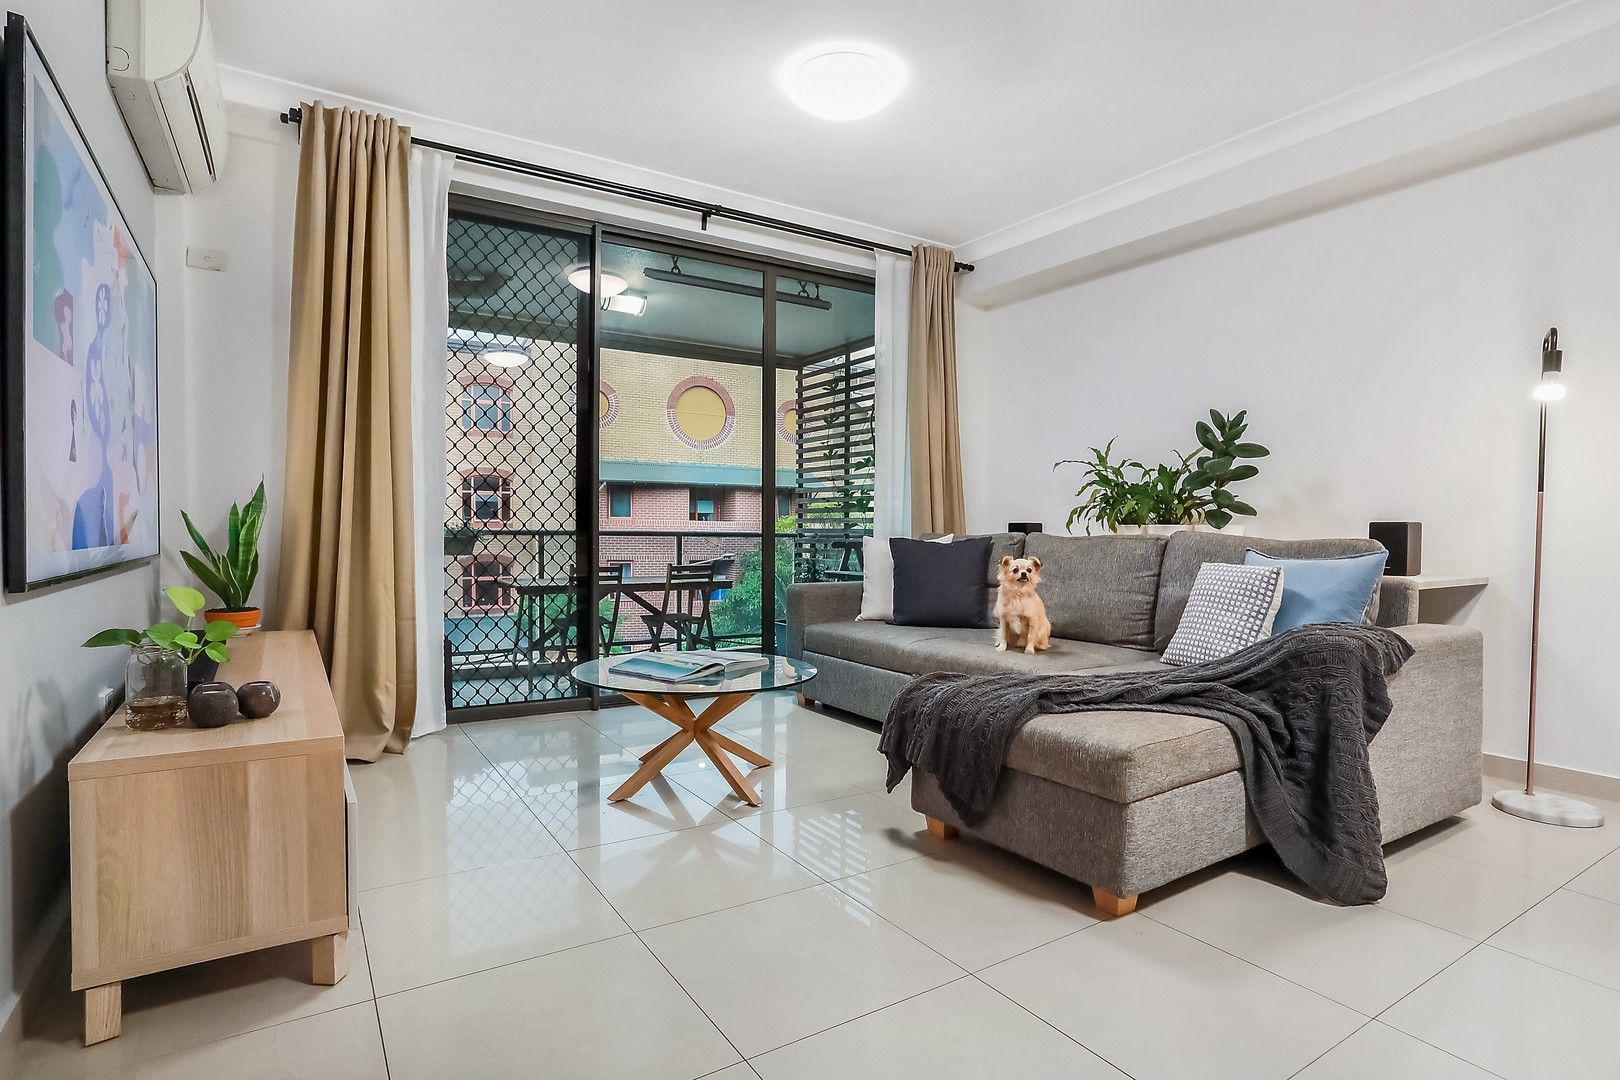 2 bedrooms House in 107/49 Henderson Road ALEXANDRIA NSW, 2015